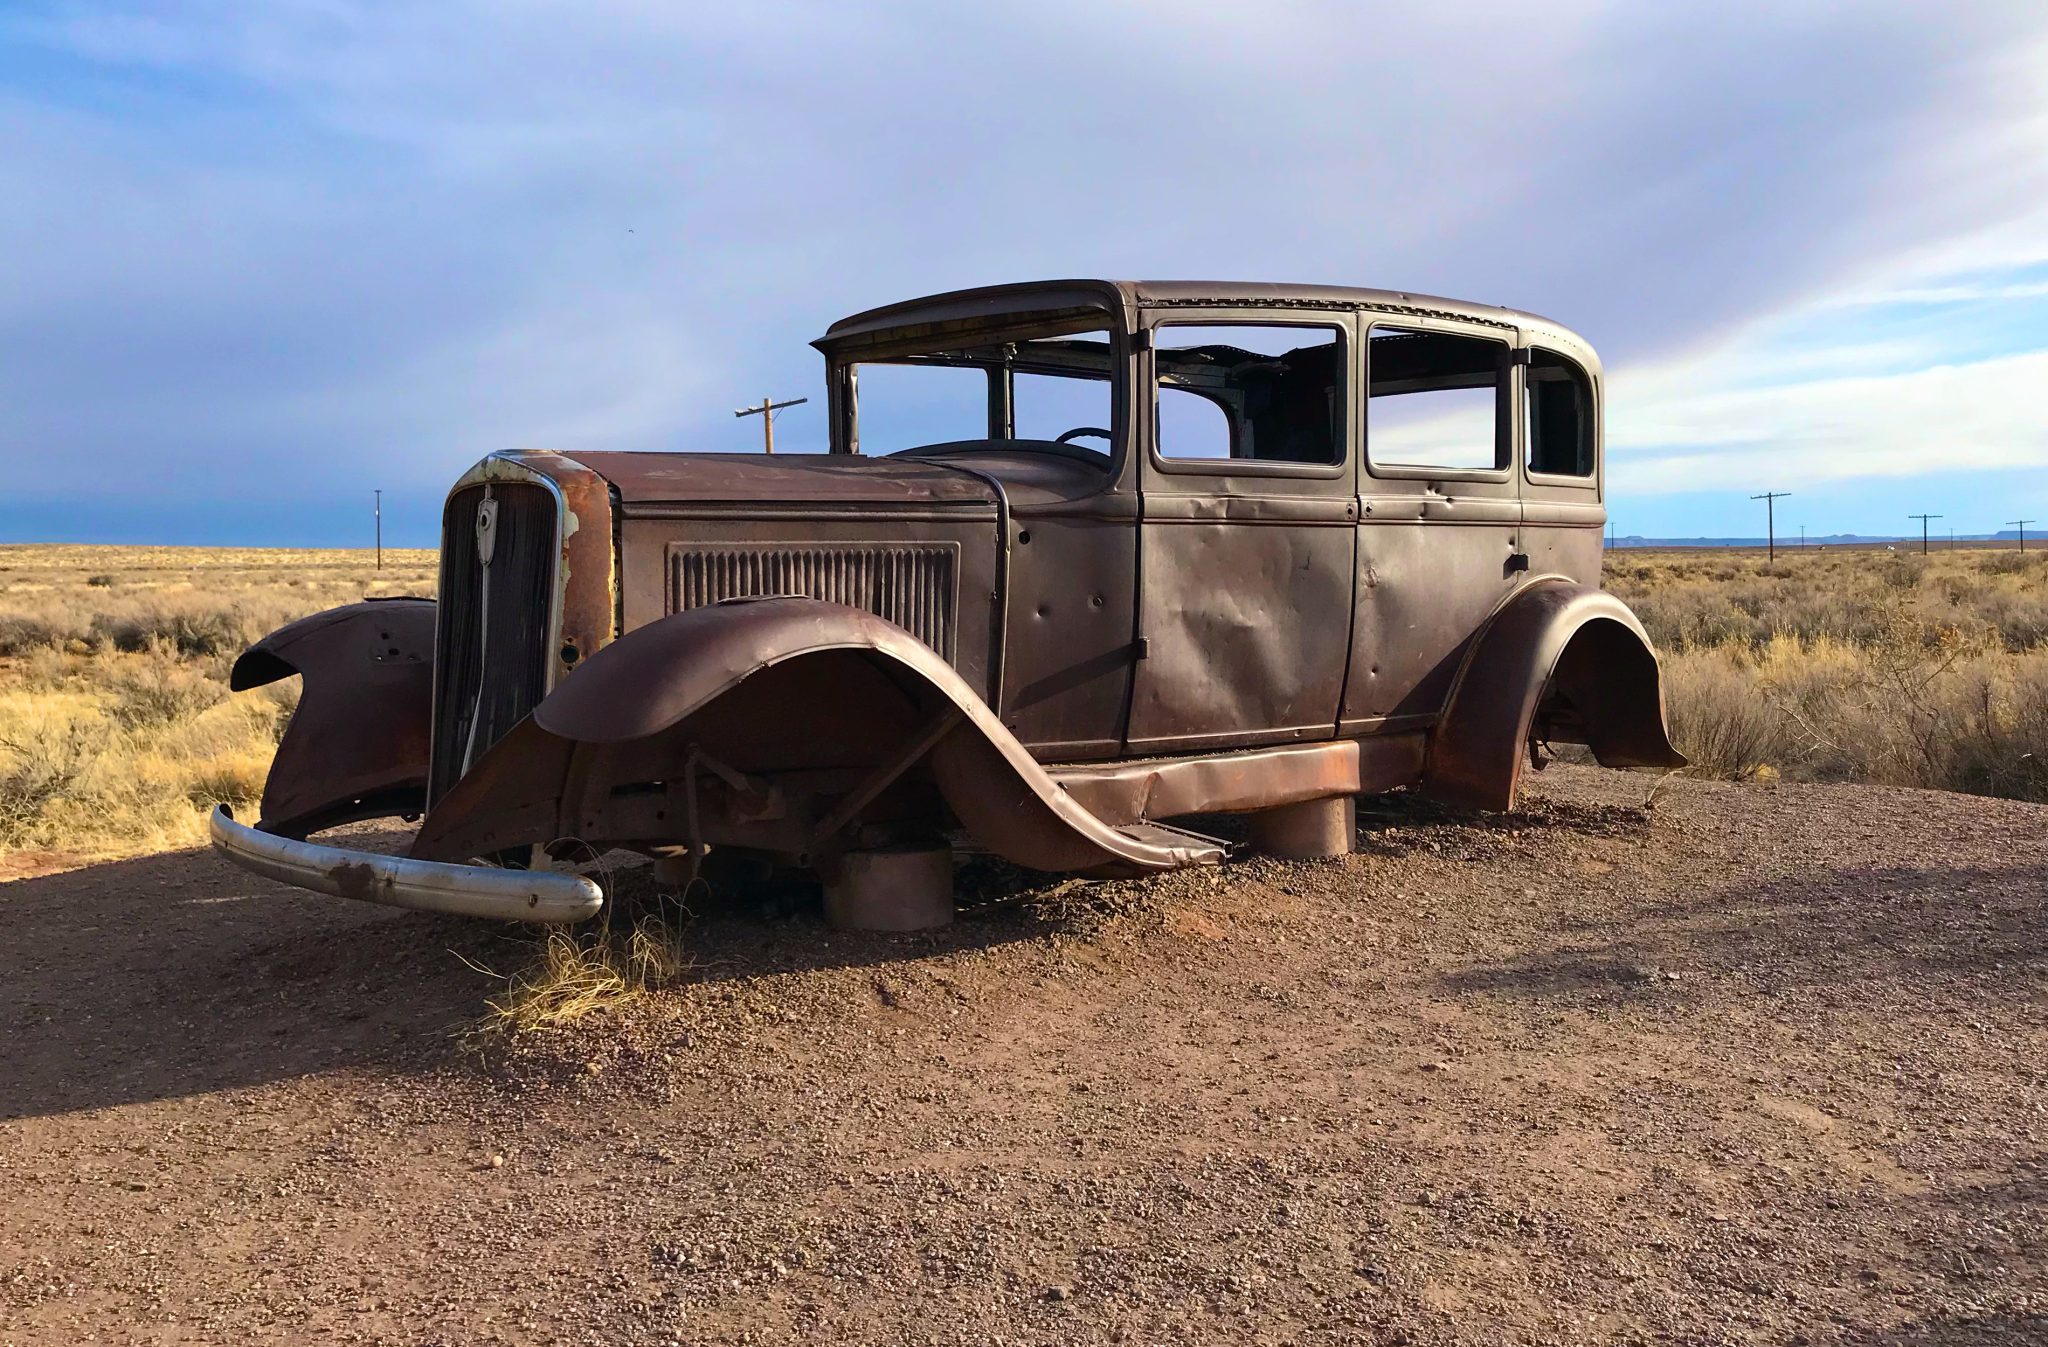 Rusted, Abandoned Vehicle In The Arizona Desert